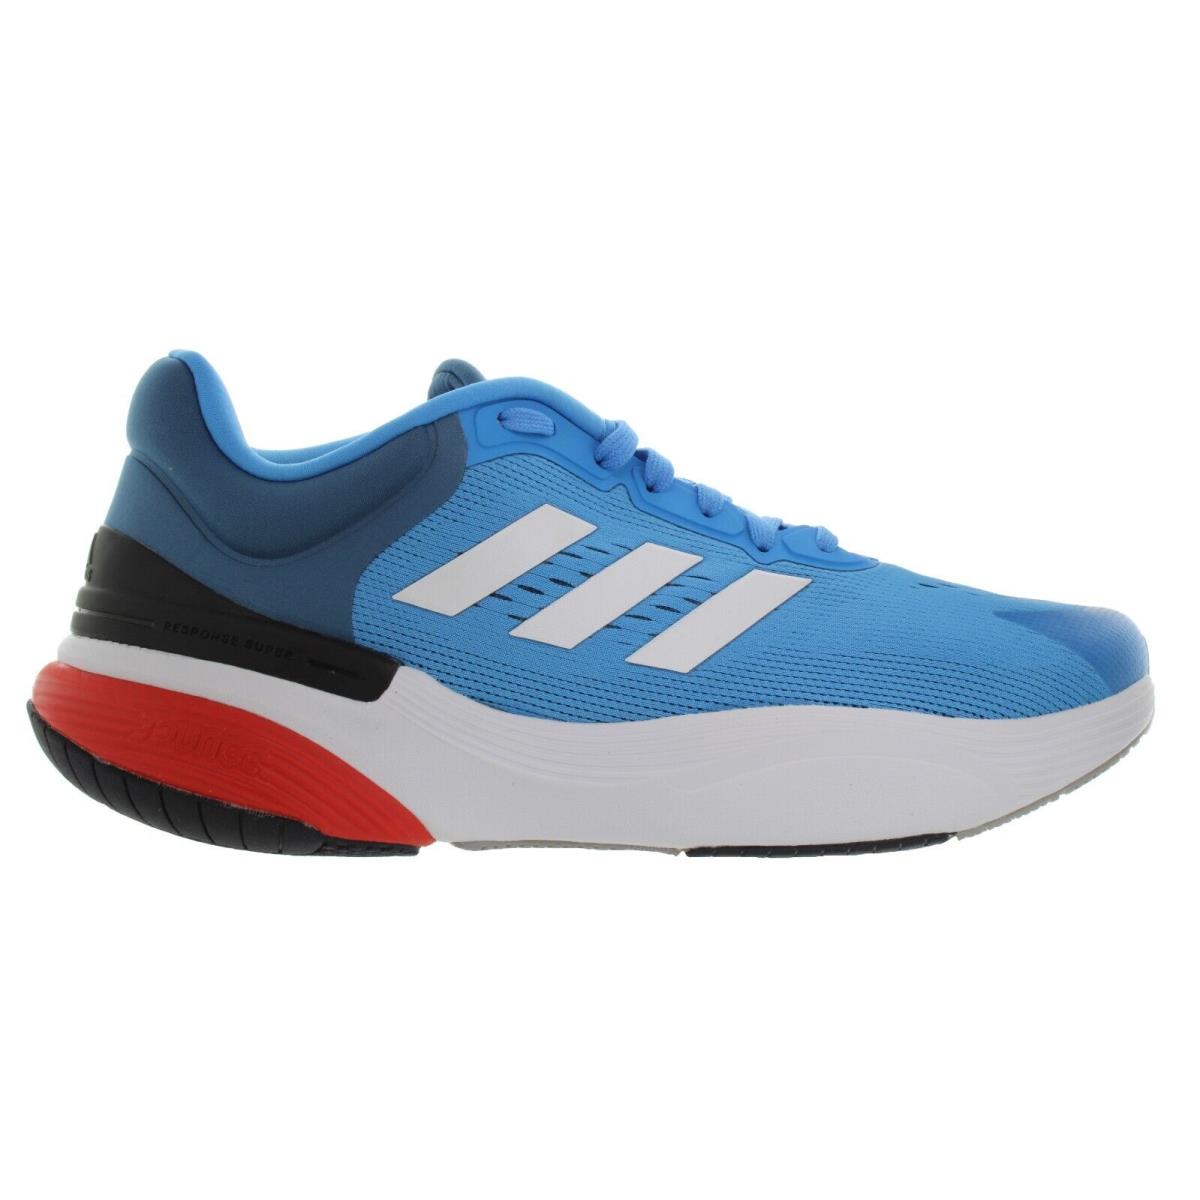 Adidas Men`s Response Super 3.0 Blue Training Shoes Size 11.5 - 12